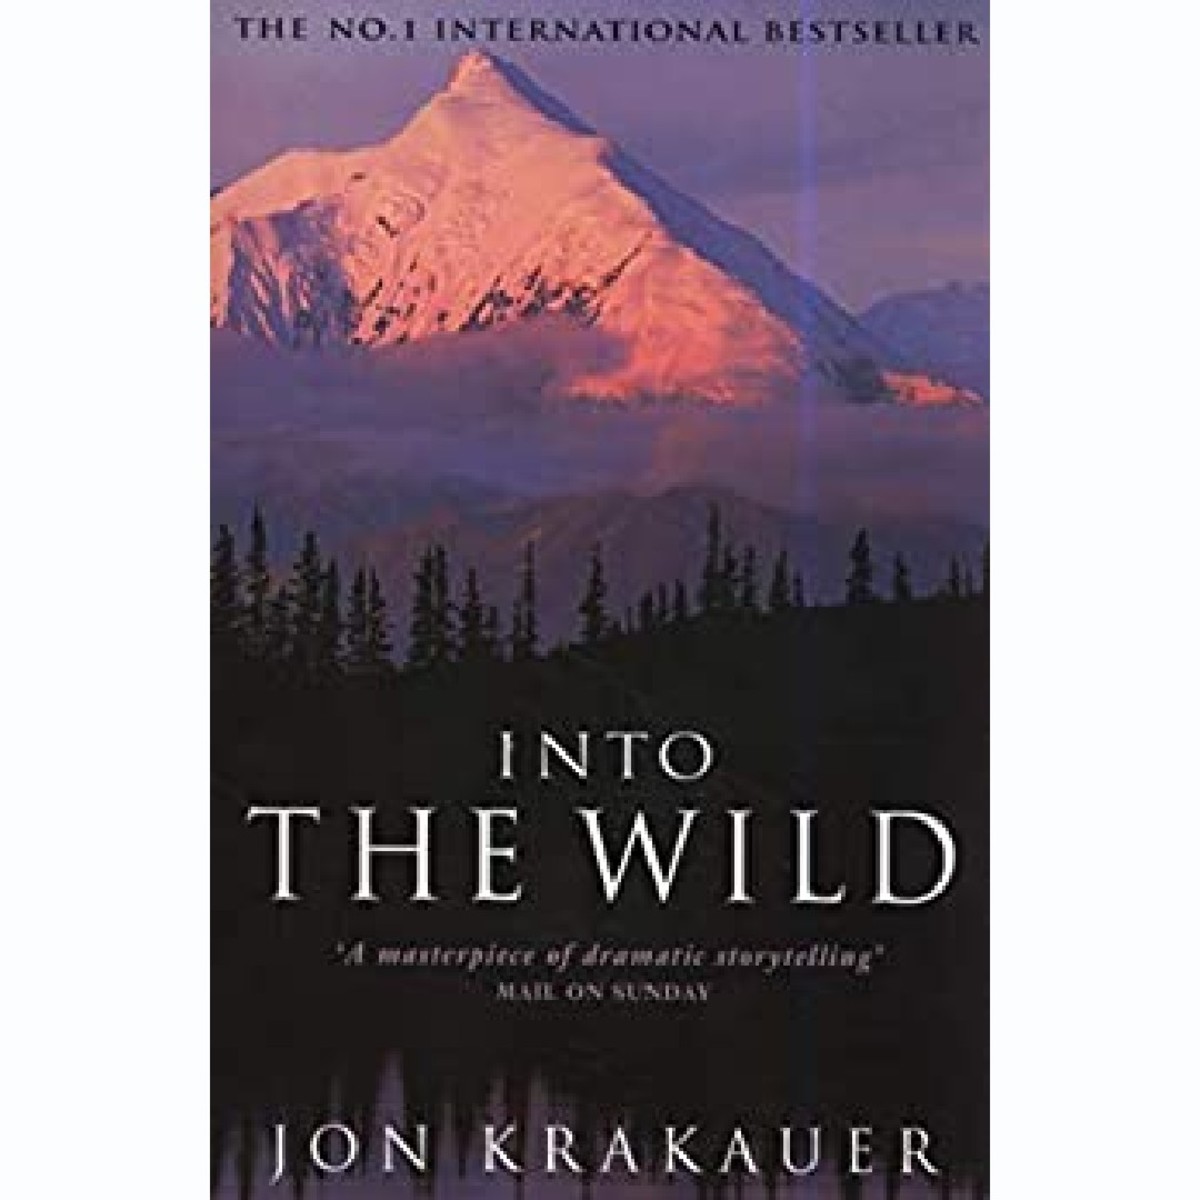 'Into the Wild' by Jon Krakauer